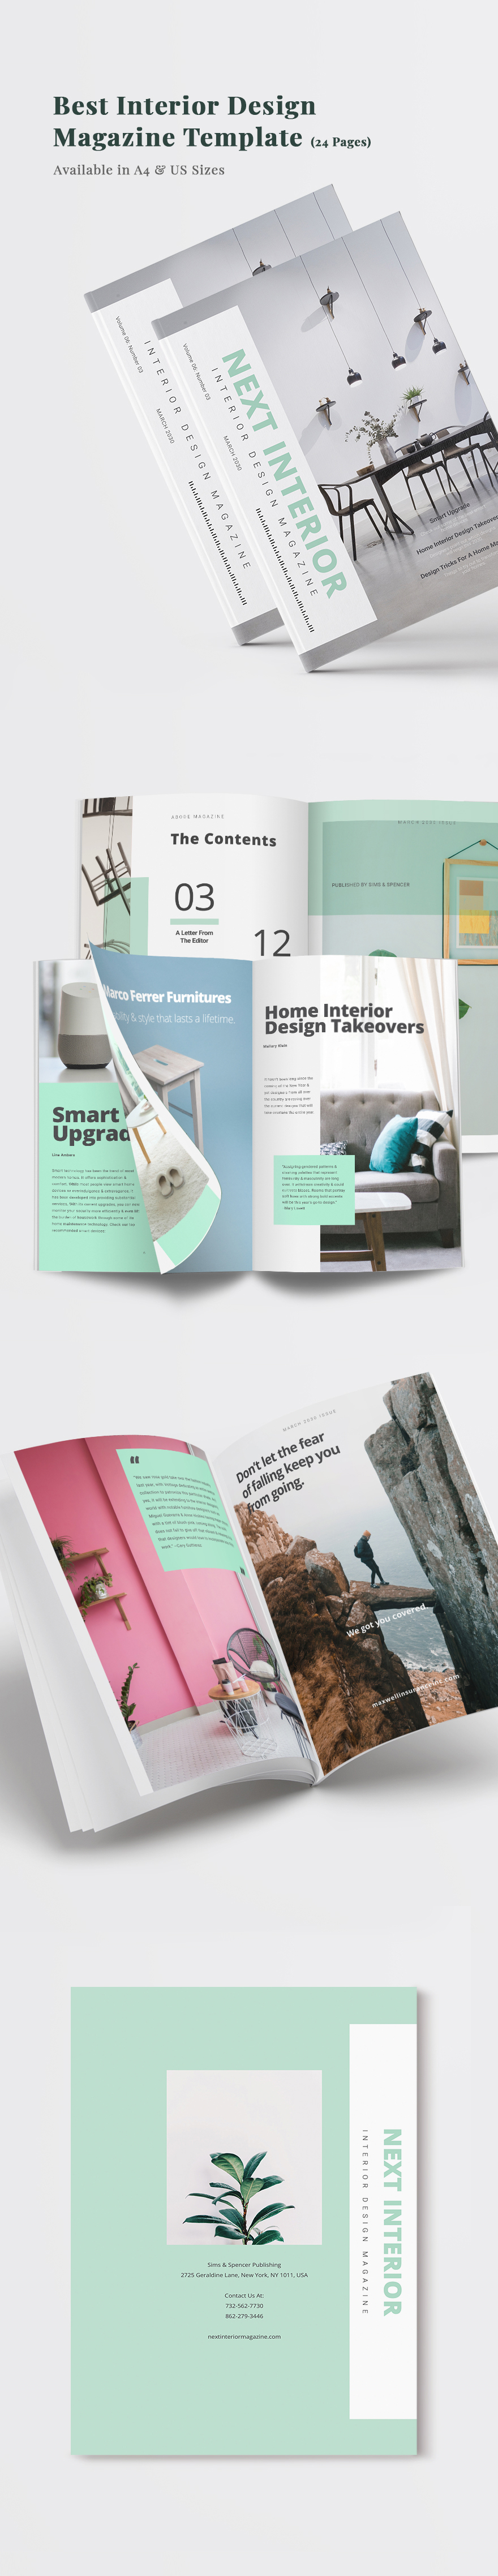 Best Interior Design Magazine Template